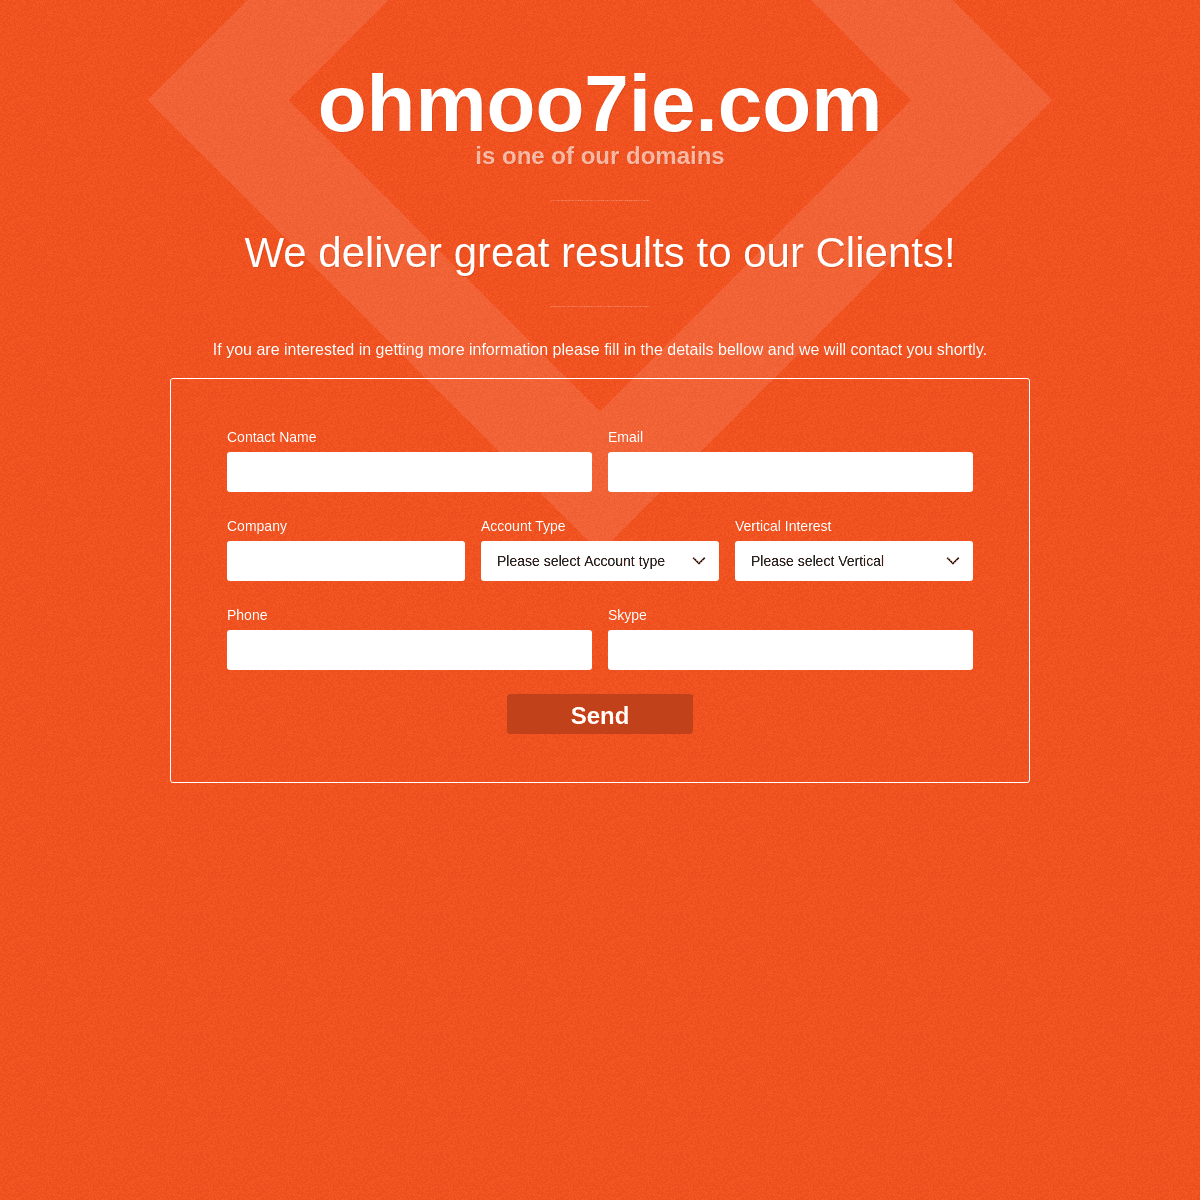 A complete backup of ohmoo7ie.com